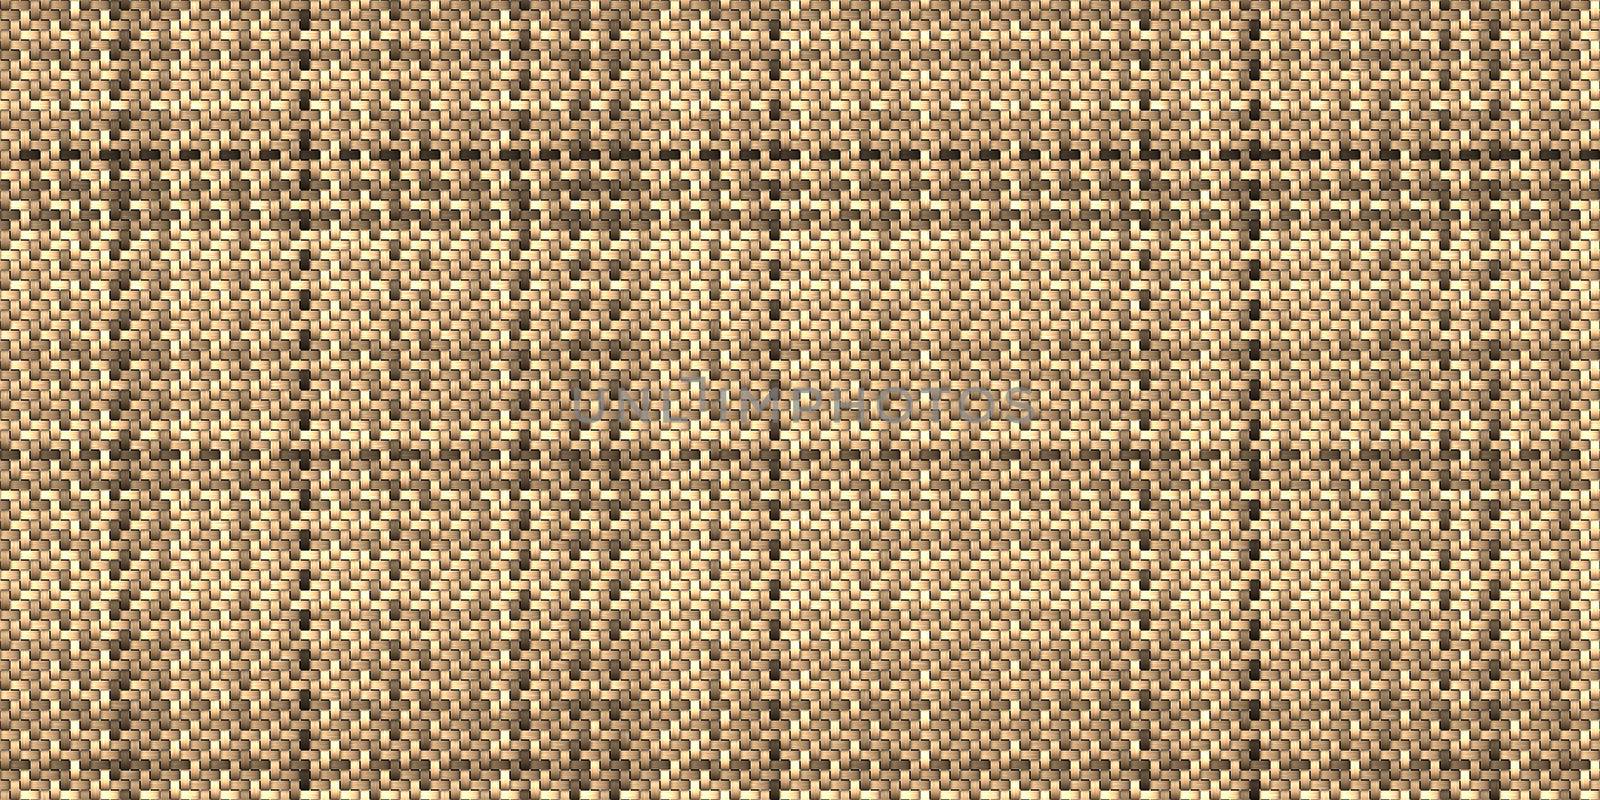 Seamless Basket Weaving Background. Woven Wicker Straw Texture.